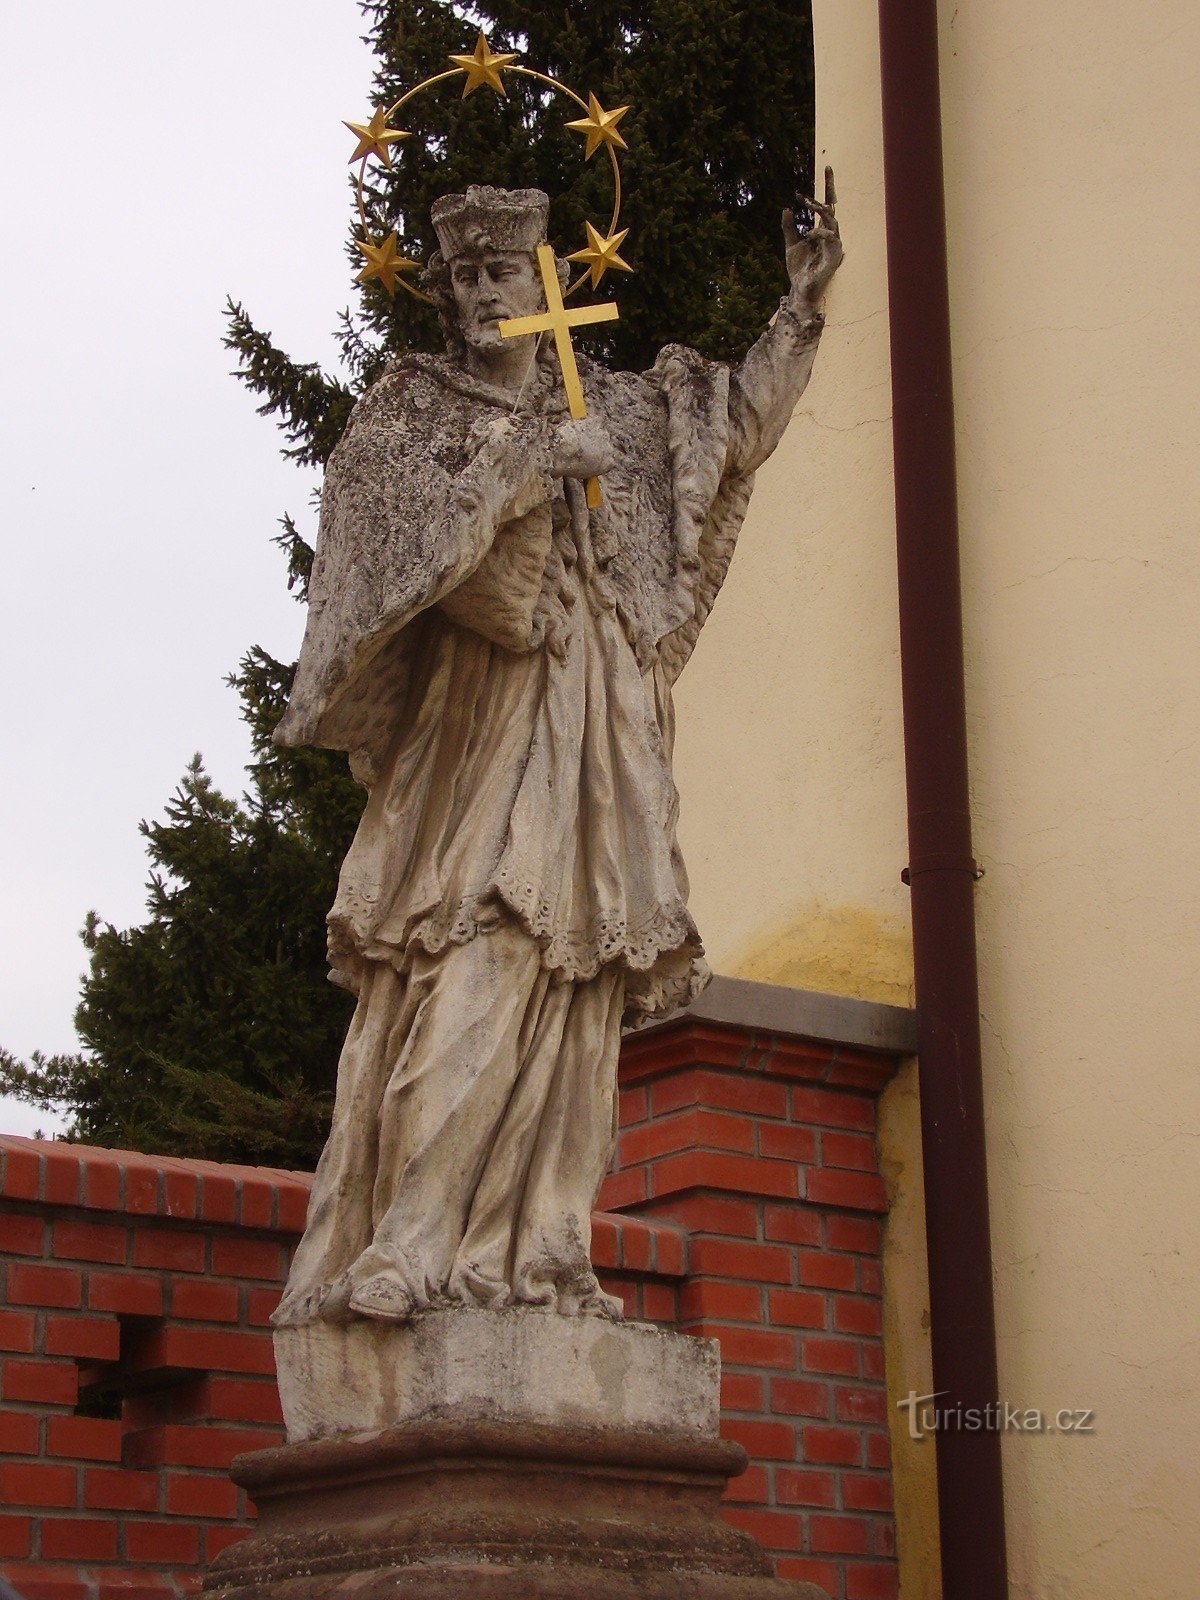 Statue of St. Jan Nepomucký in Šlapanice near Brno